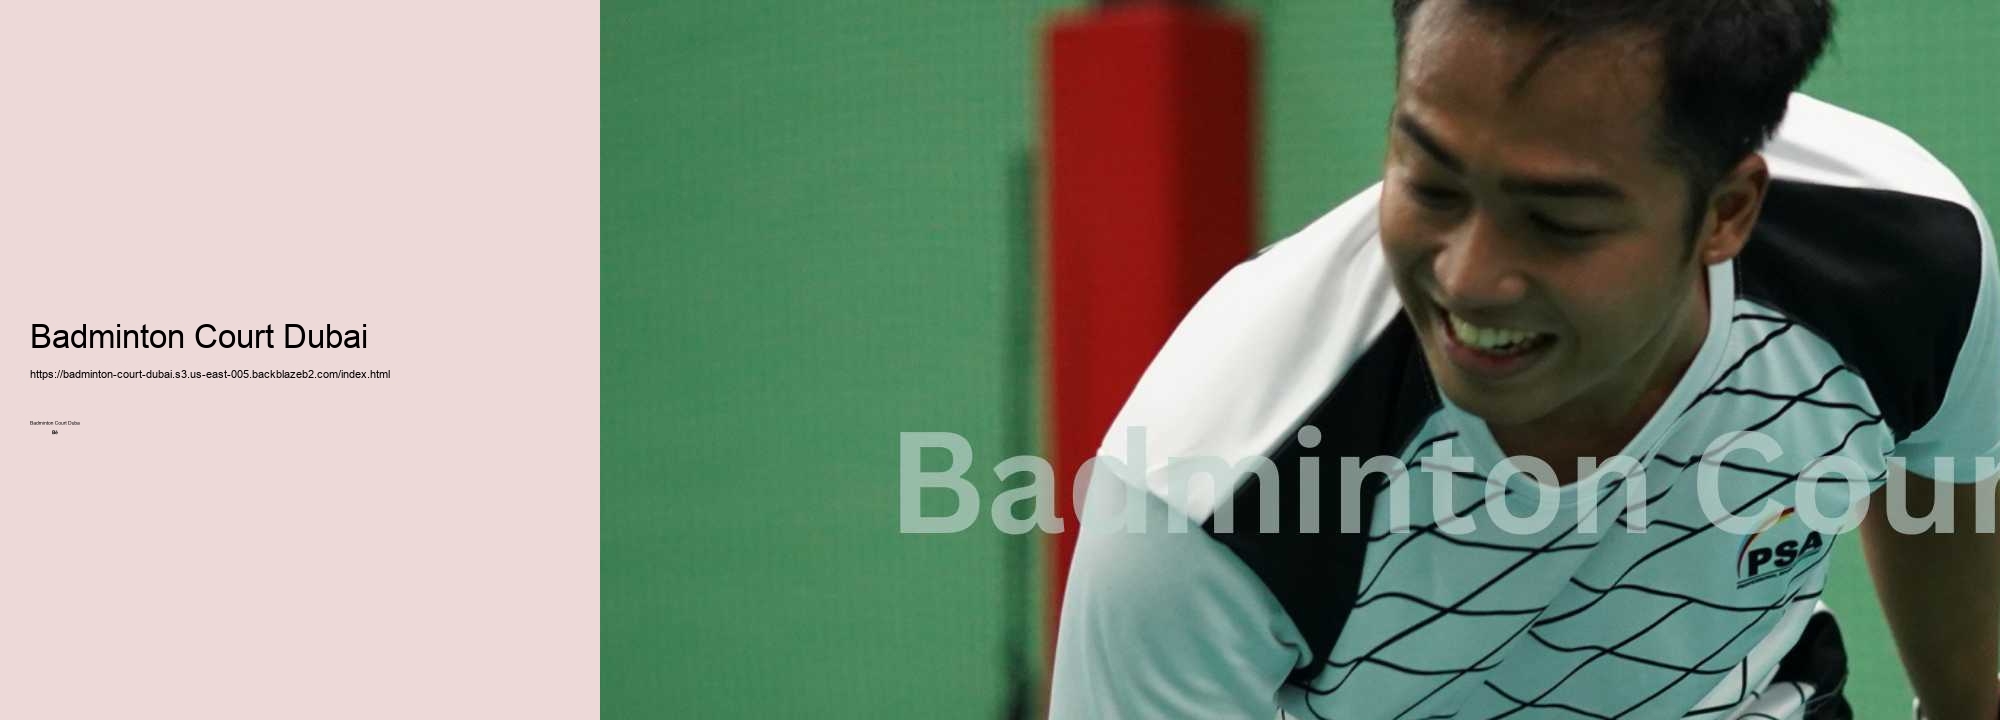 Badminton Court Dubai